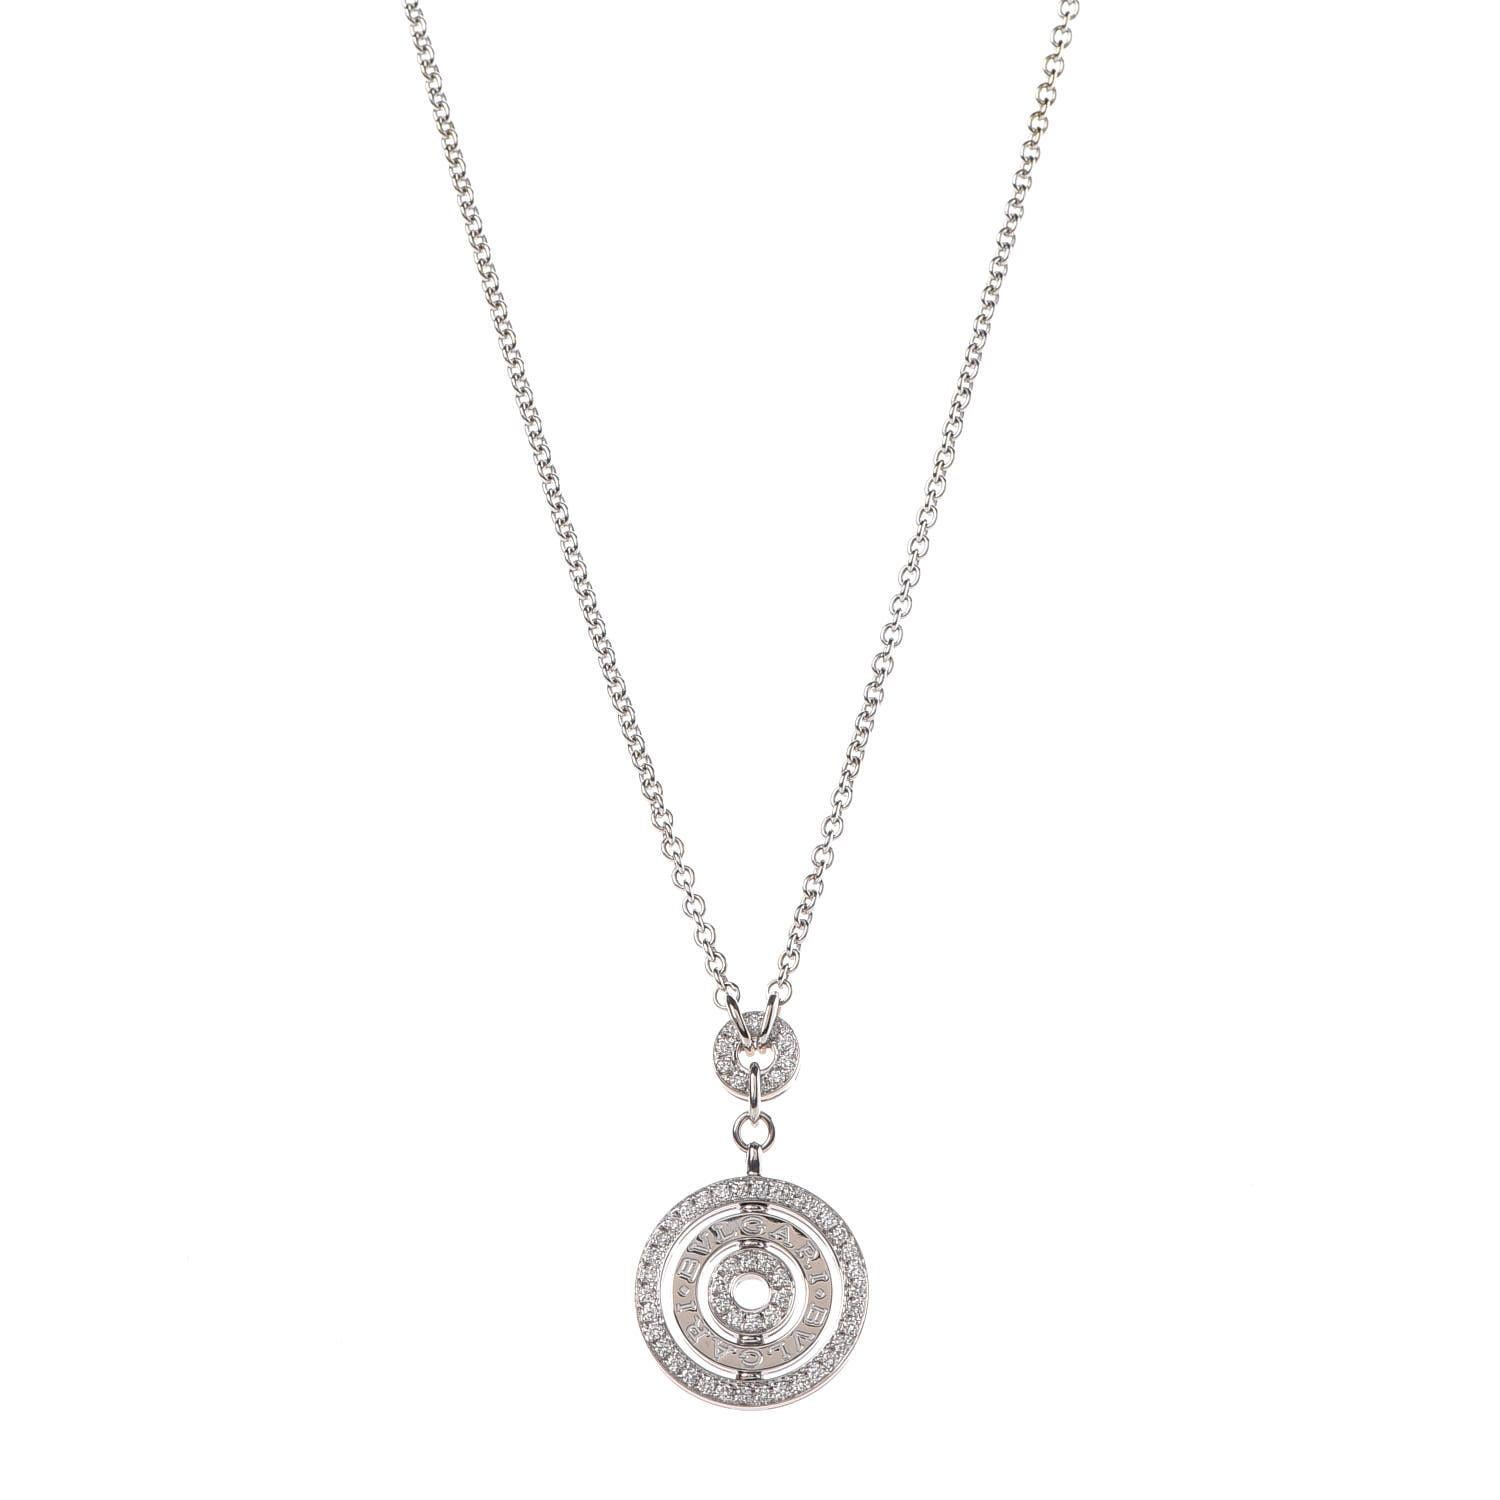 A magnificent Bulgari necklace circa 2000s showcasing the signature Bulgari Bulgari motif adorned with round brilliant cut diamonds 18k white gold. 

Chain Measurements: 17